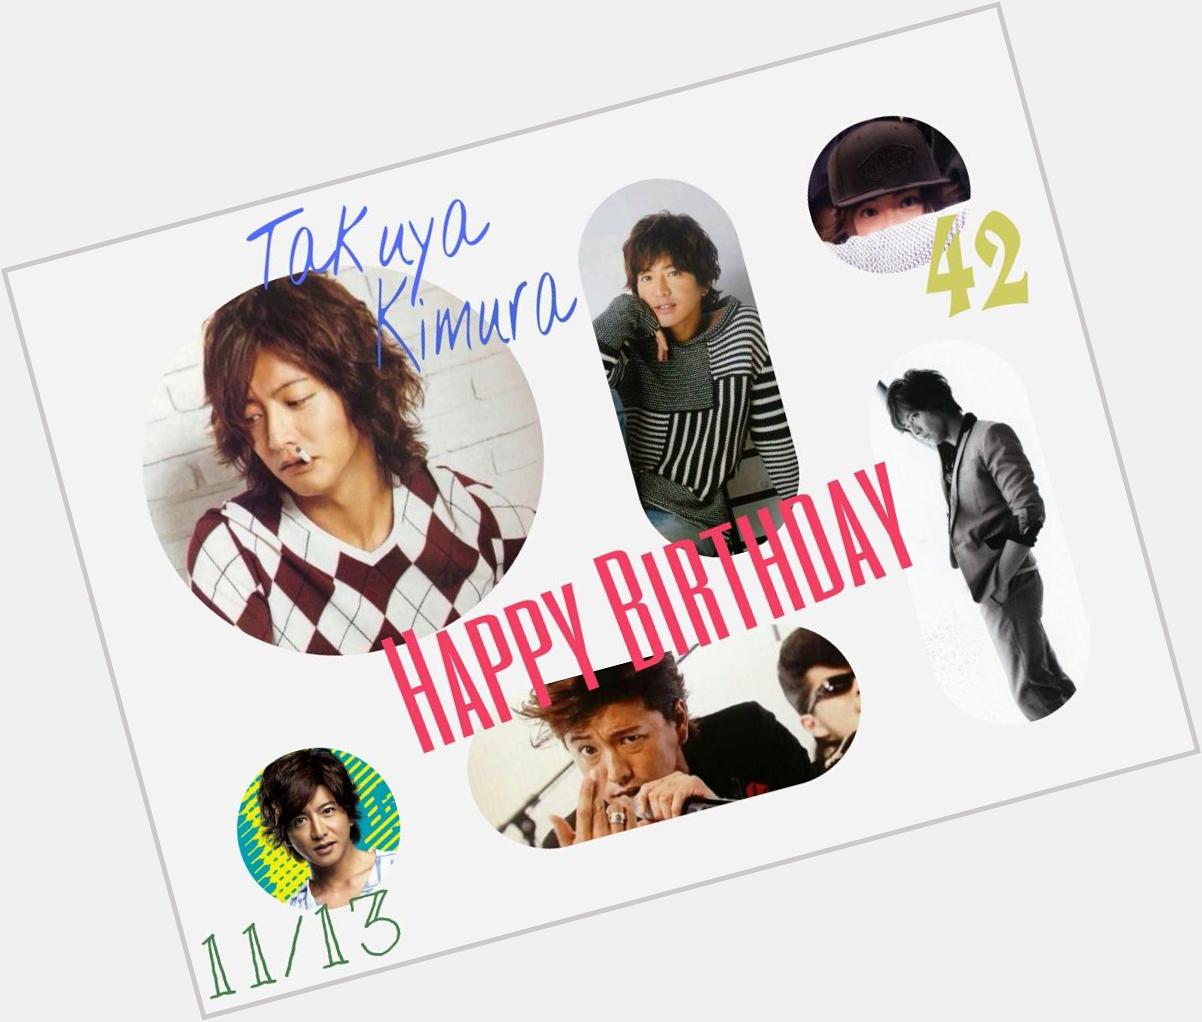 Takuya Kimura
Happy Birthday!!                                                        